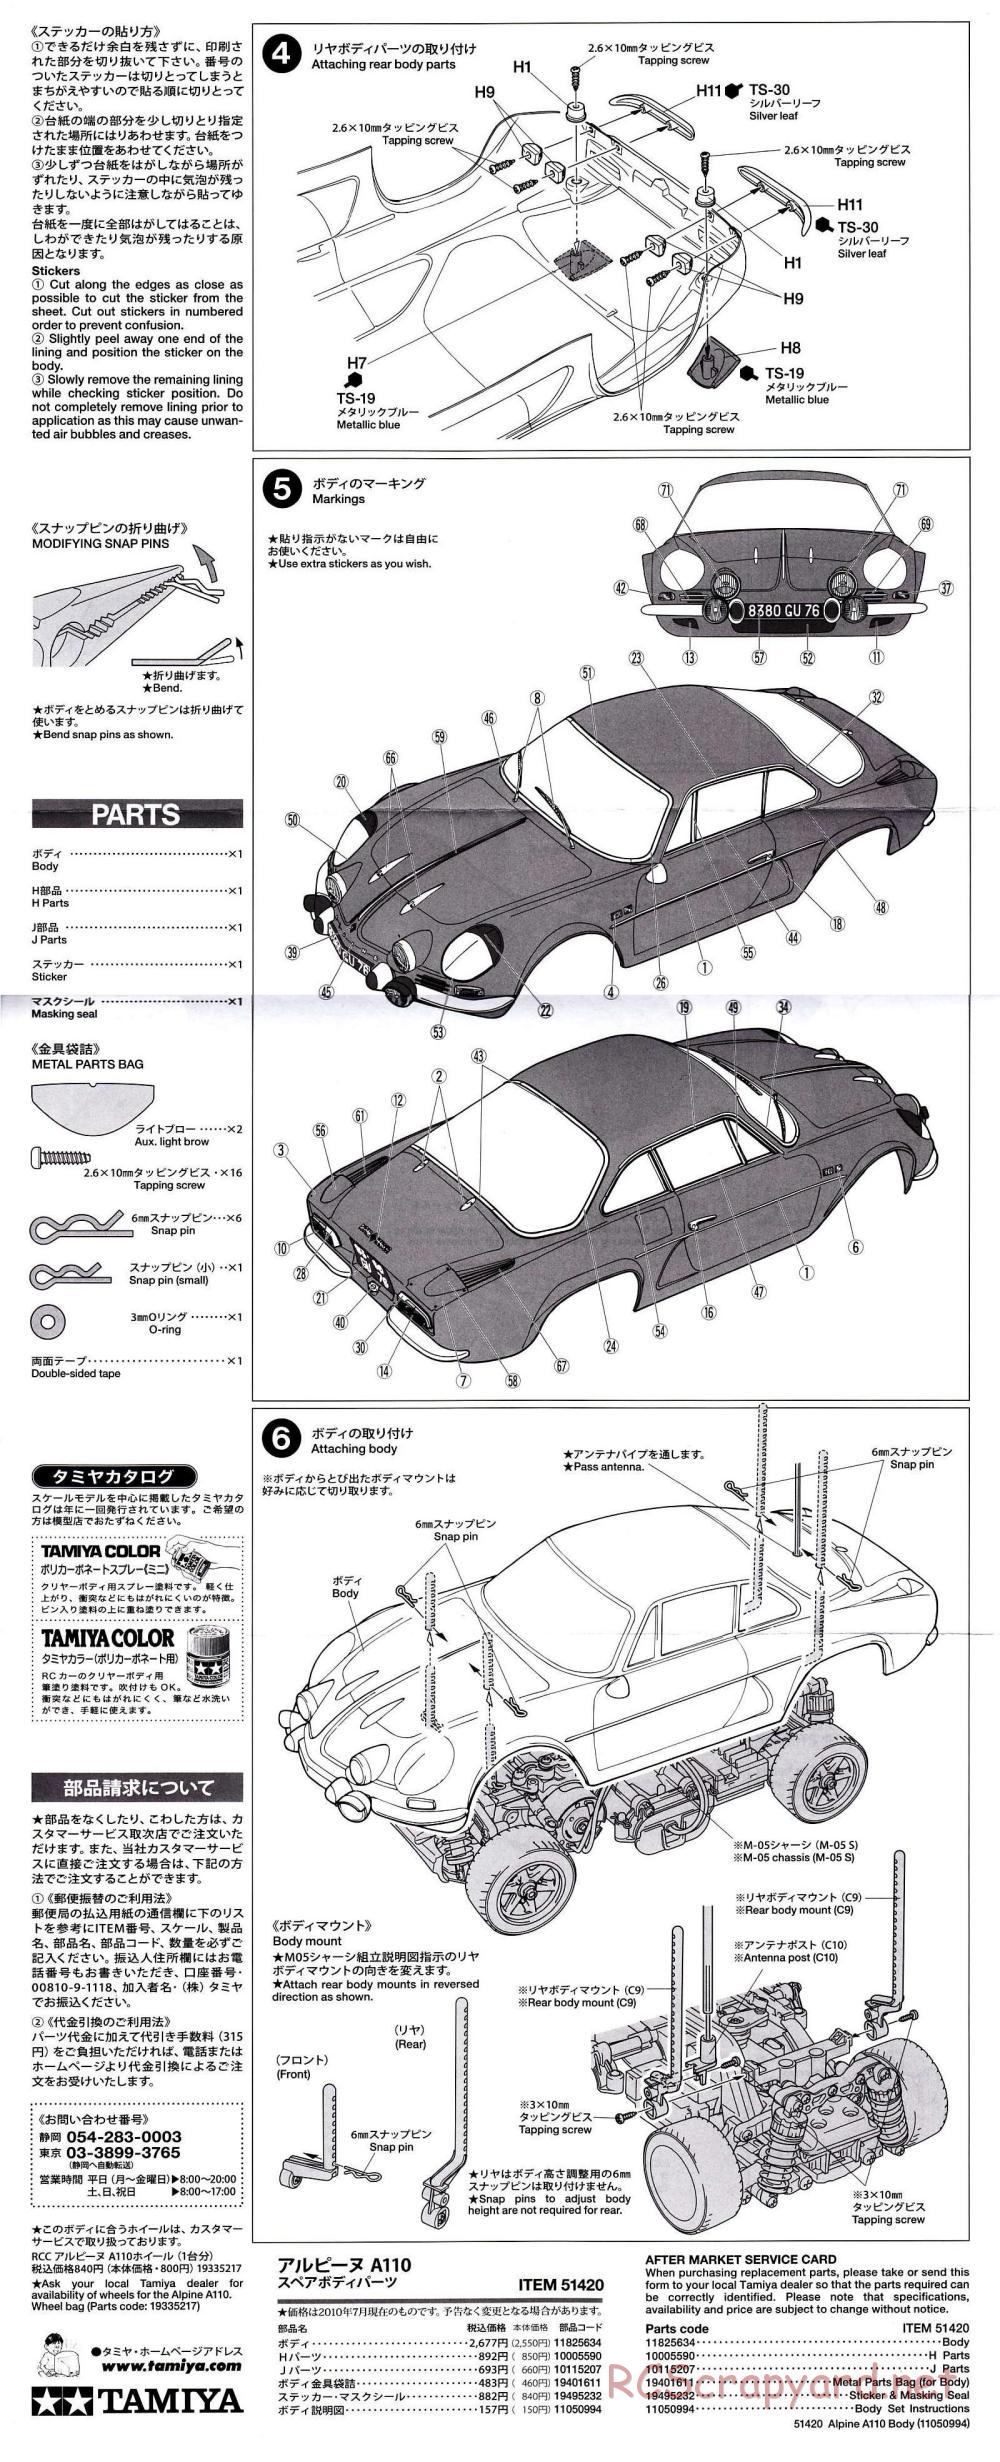 Tamiya - Alpine A110 - M-05Ra Chassis - Body Manual - Page 2